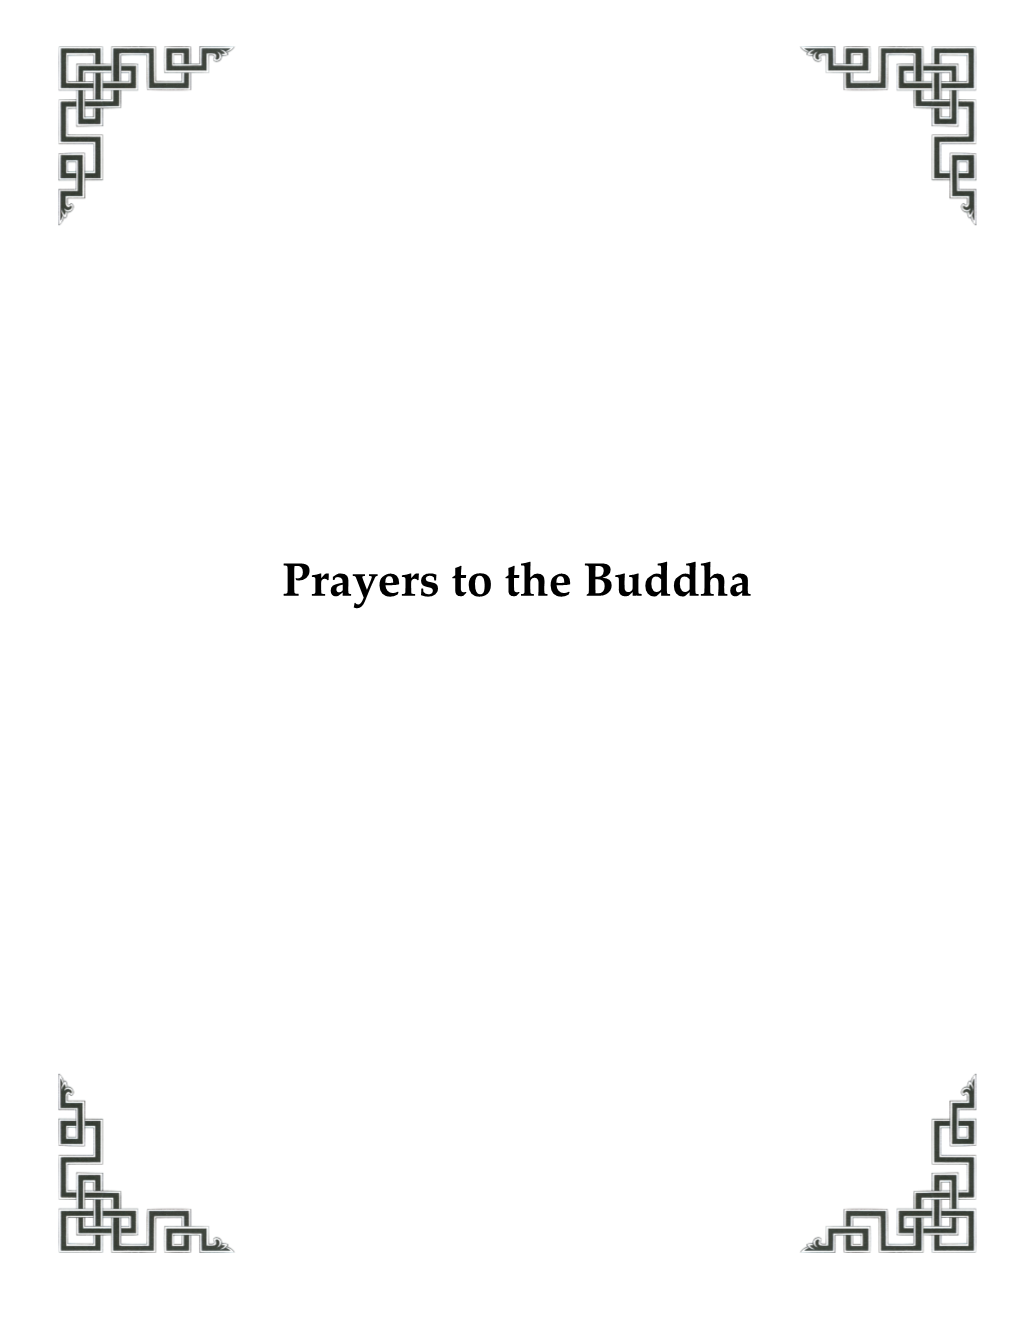 Prayers to the Buddha Text for Chotrul Duchen 26Feb21